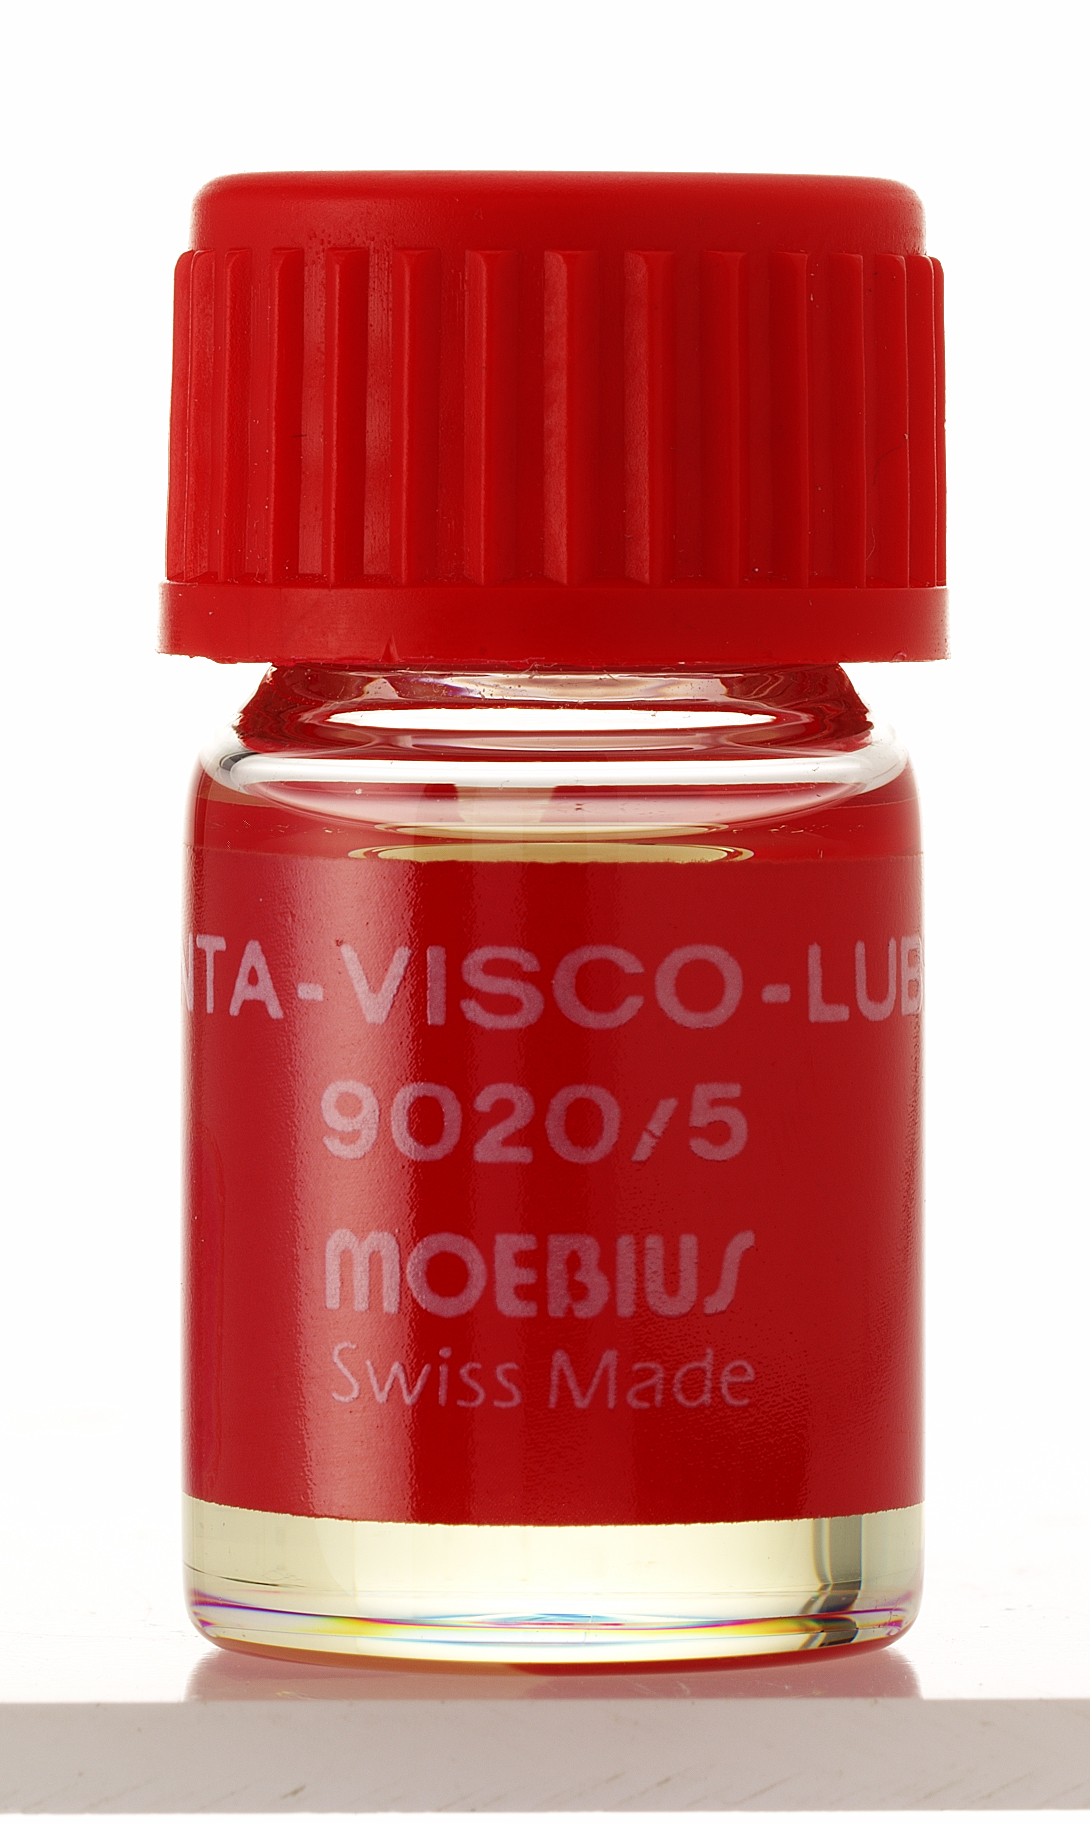 Öl Synta-Visco-Lube Moebius 9020 - 5 ml